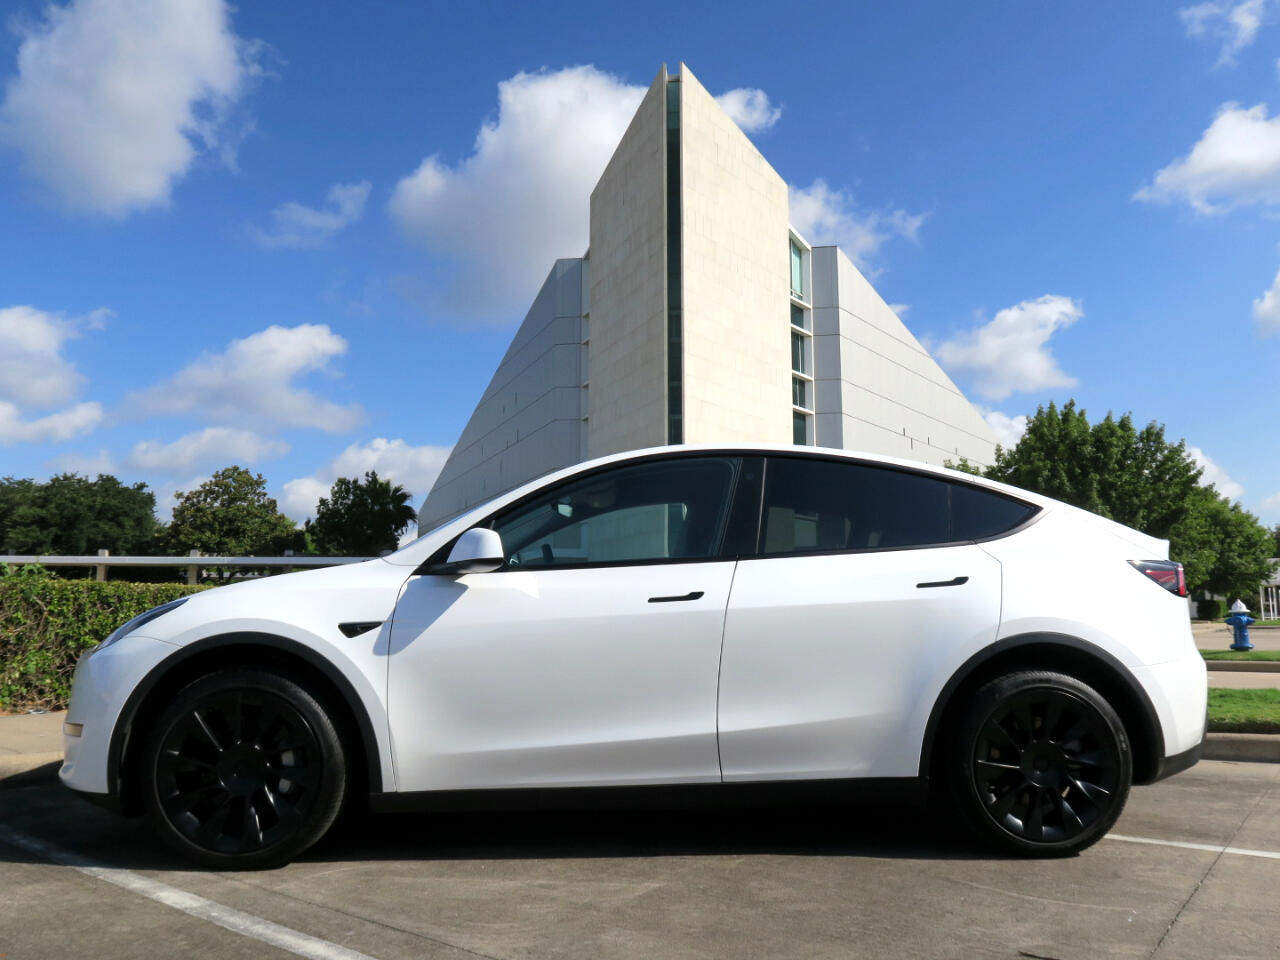 2023 Tesla Model Y Long Range AWD